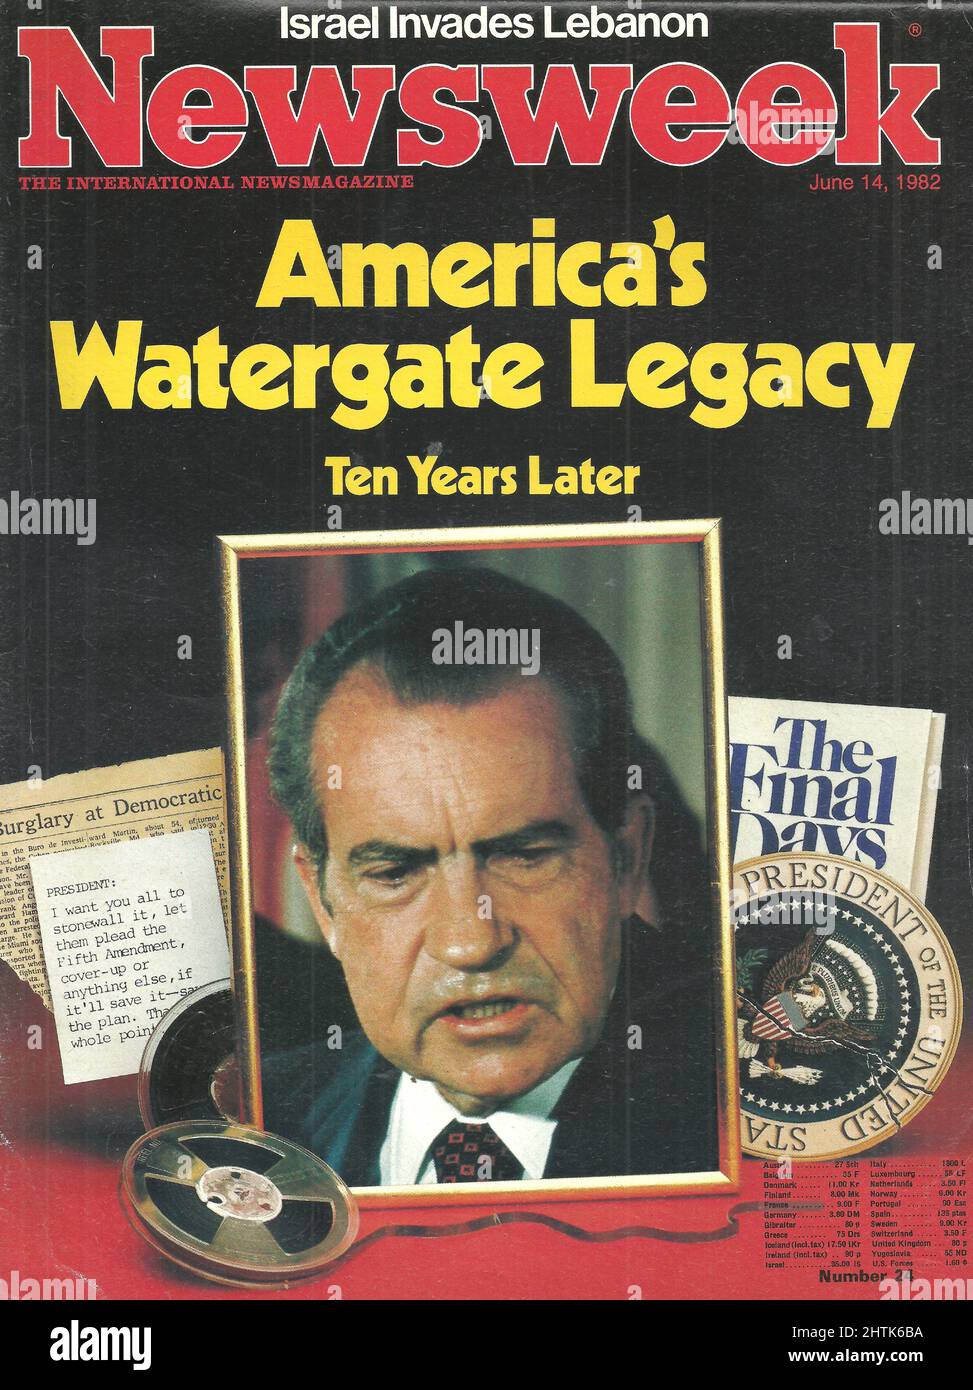 Newsweek cover June 14 1982 America's Watergate Legacy Richard Nixon Israel invades Lebanon Stock Photo